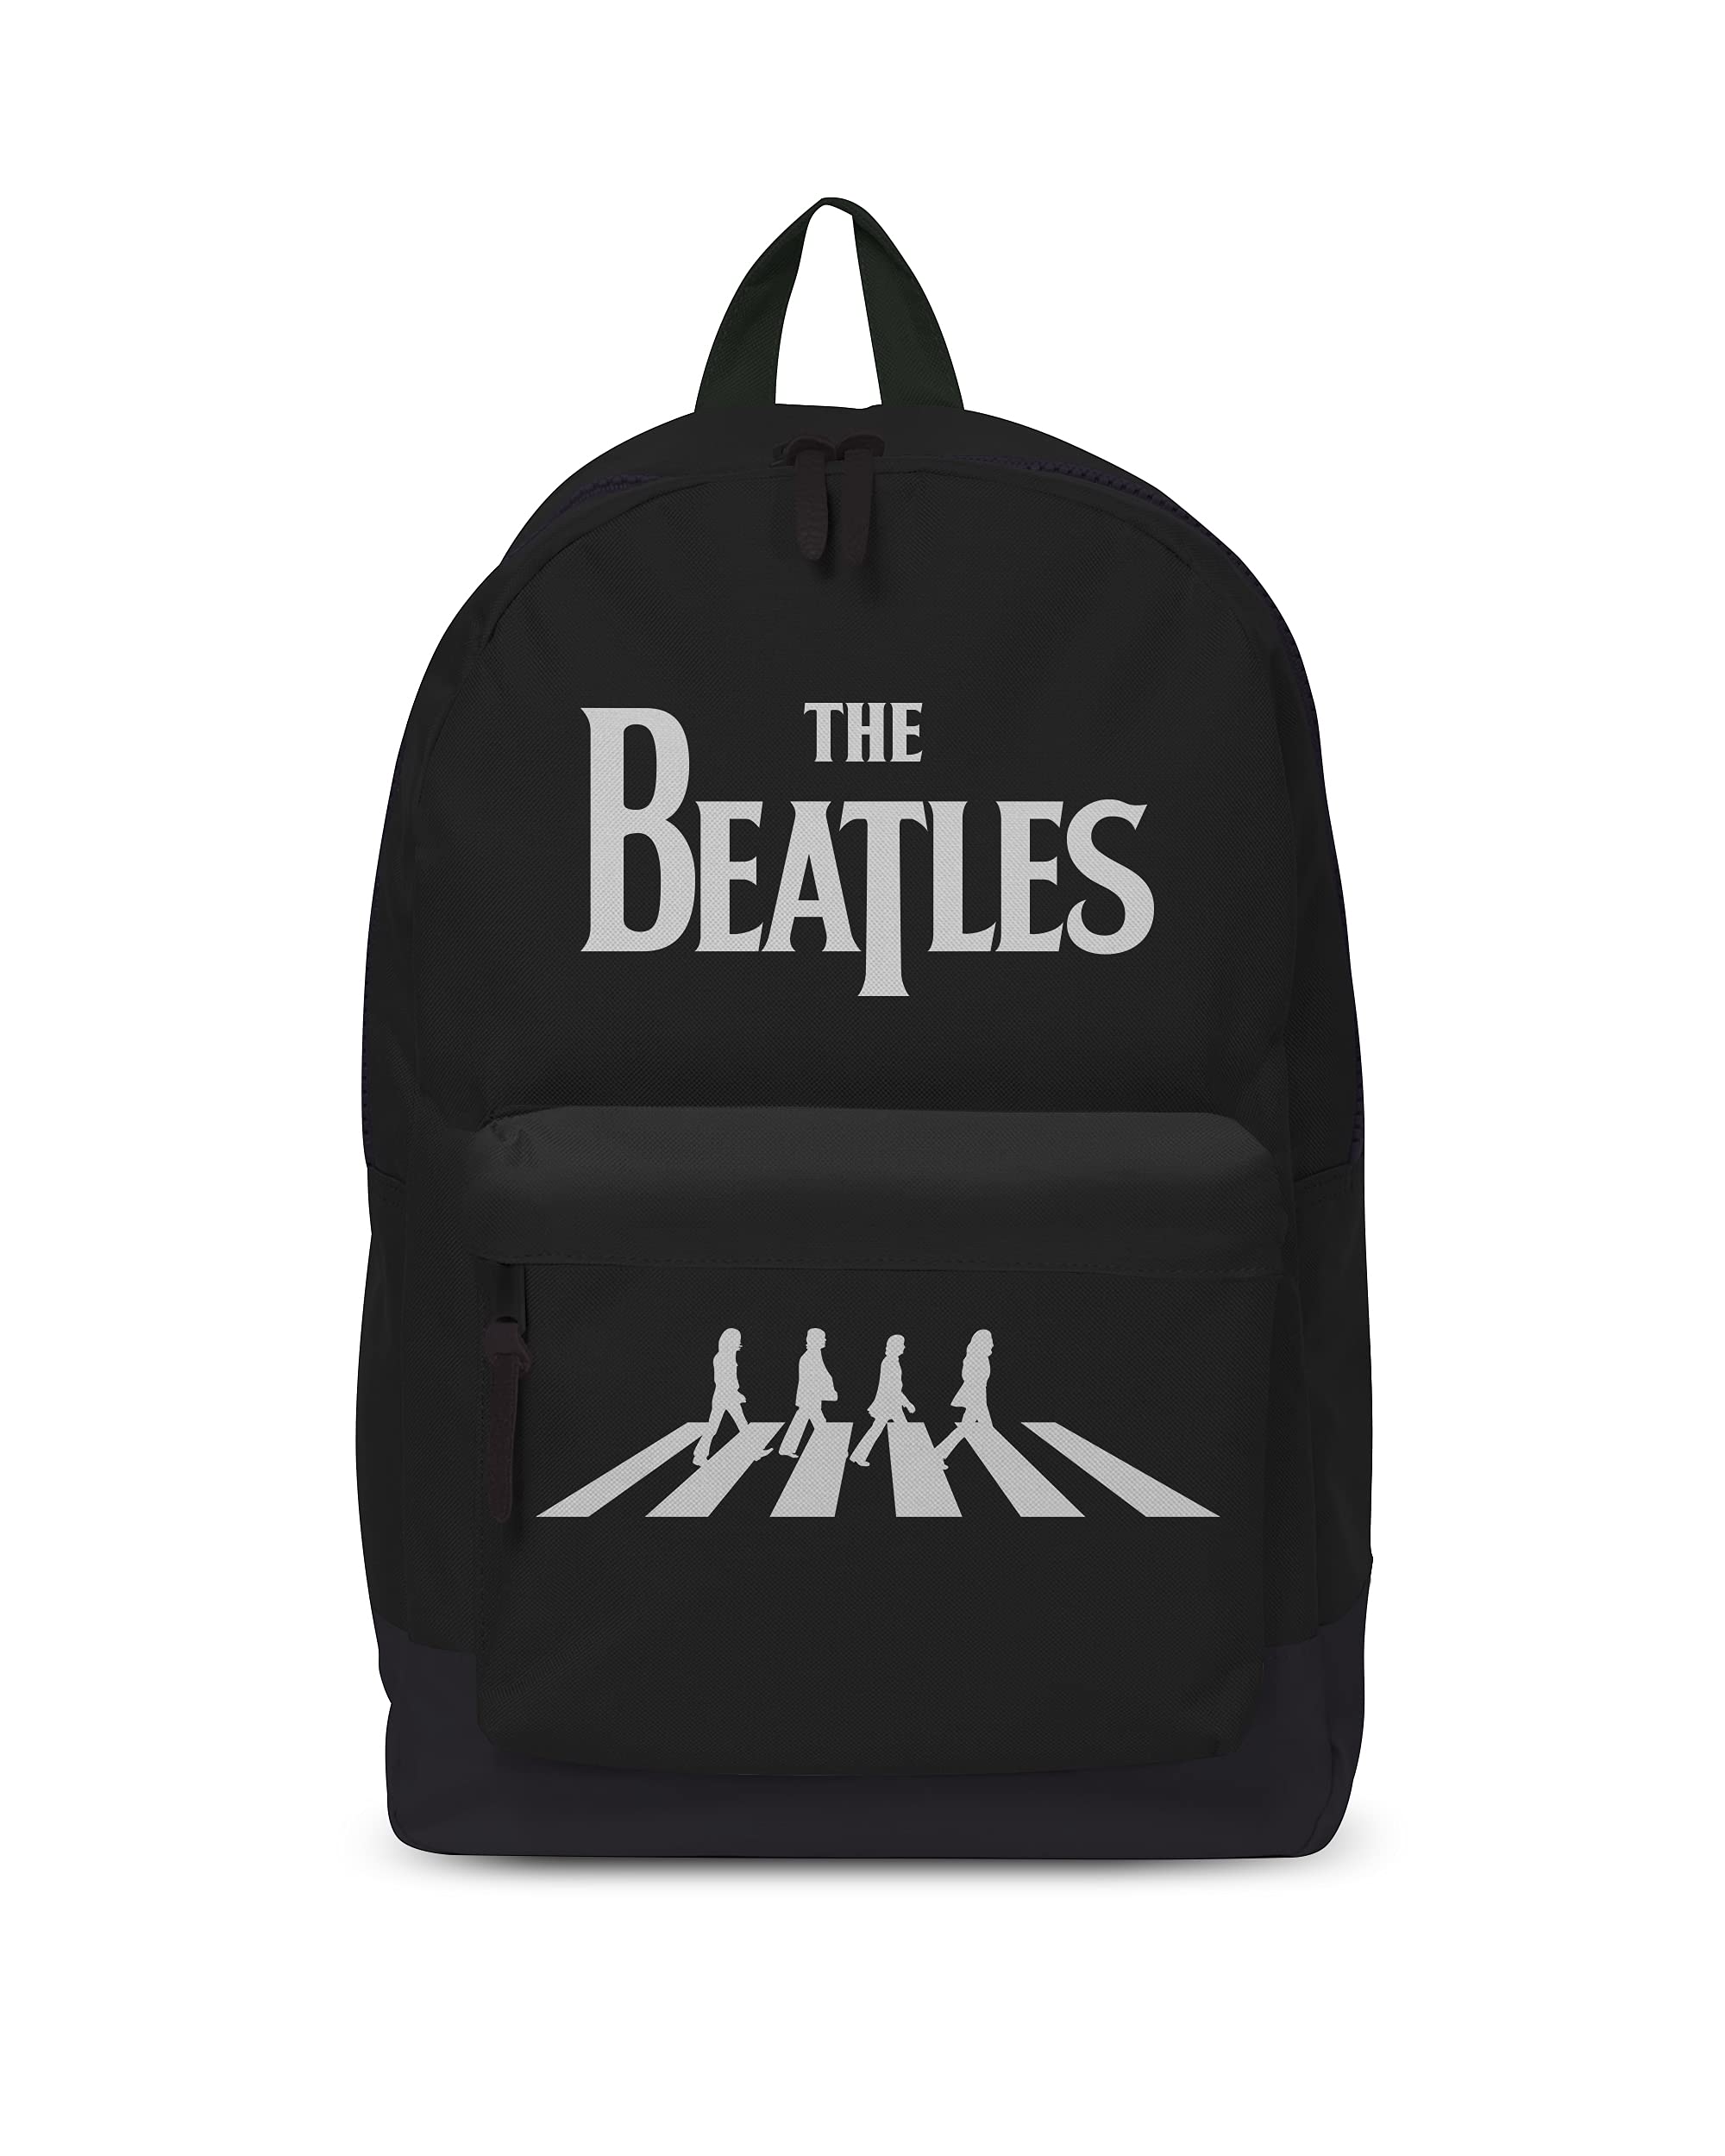 The Beatles Backpack, Black, Height 45cm, Width 30cm, Depth 15cm